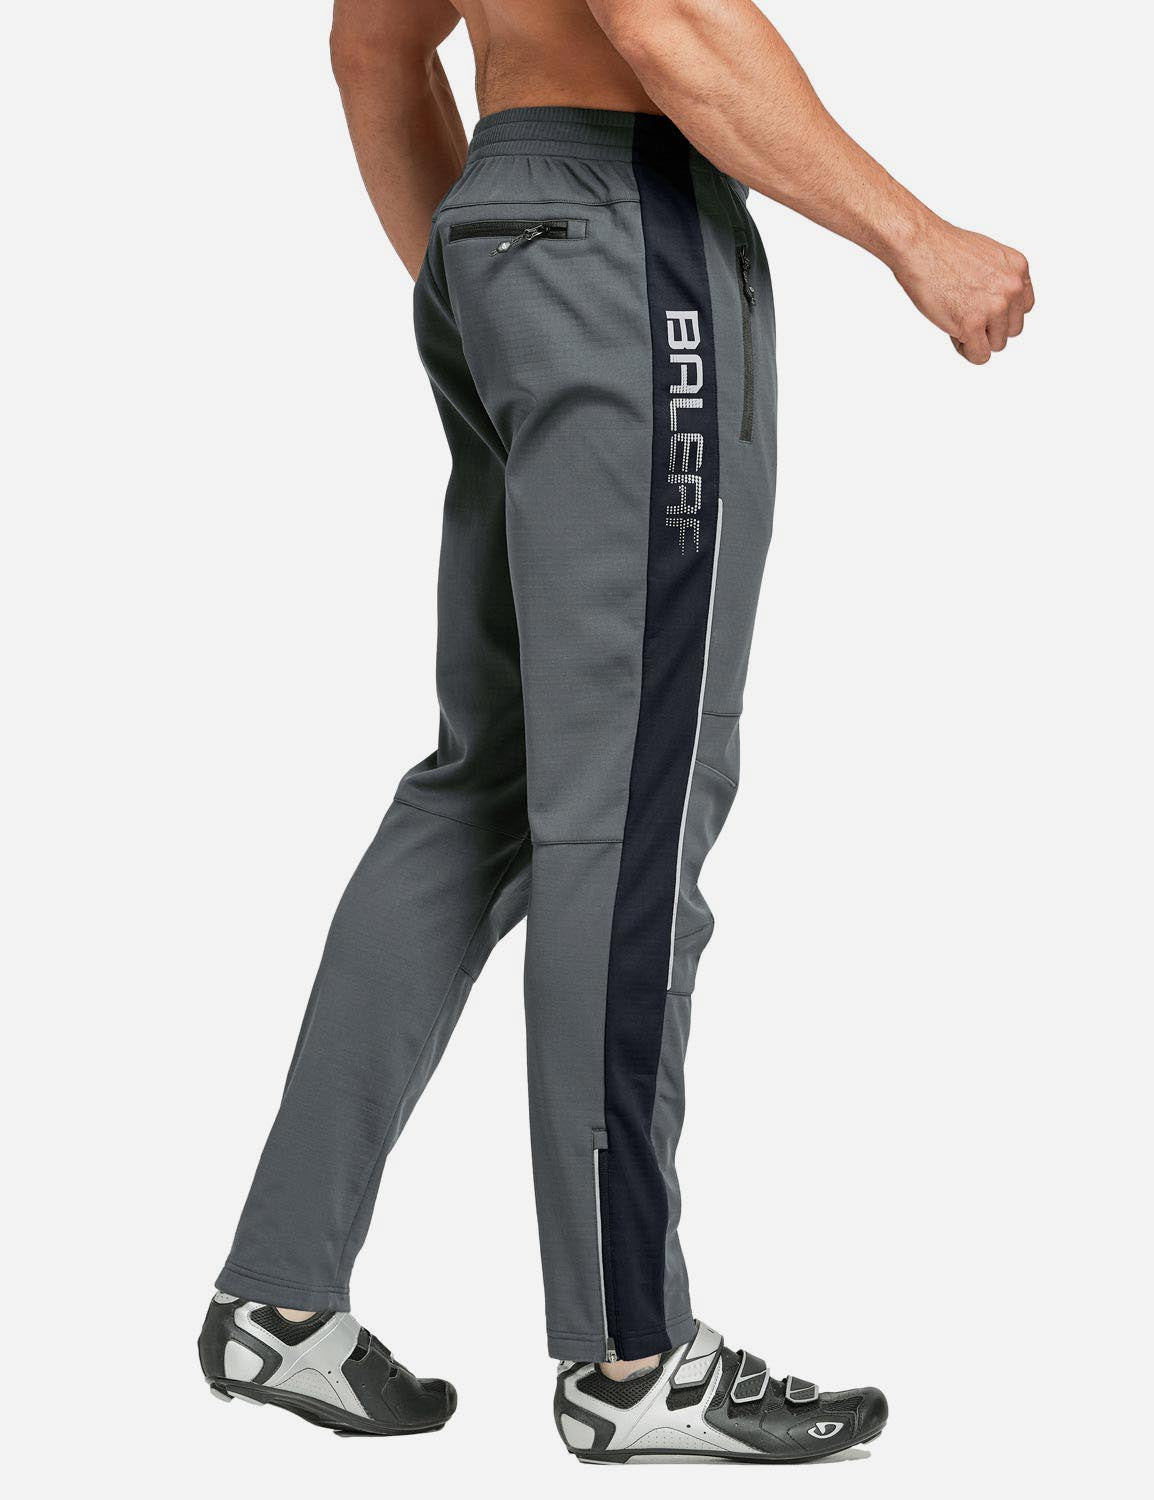 Baleaf Men's Thermal Fleece-Lined Windproof Pocketed Sweat Pants aai076 Gray/Black Side